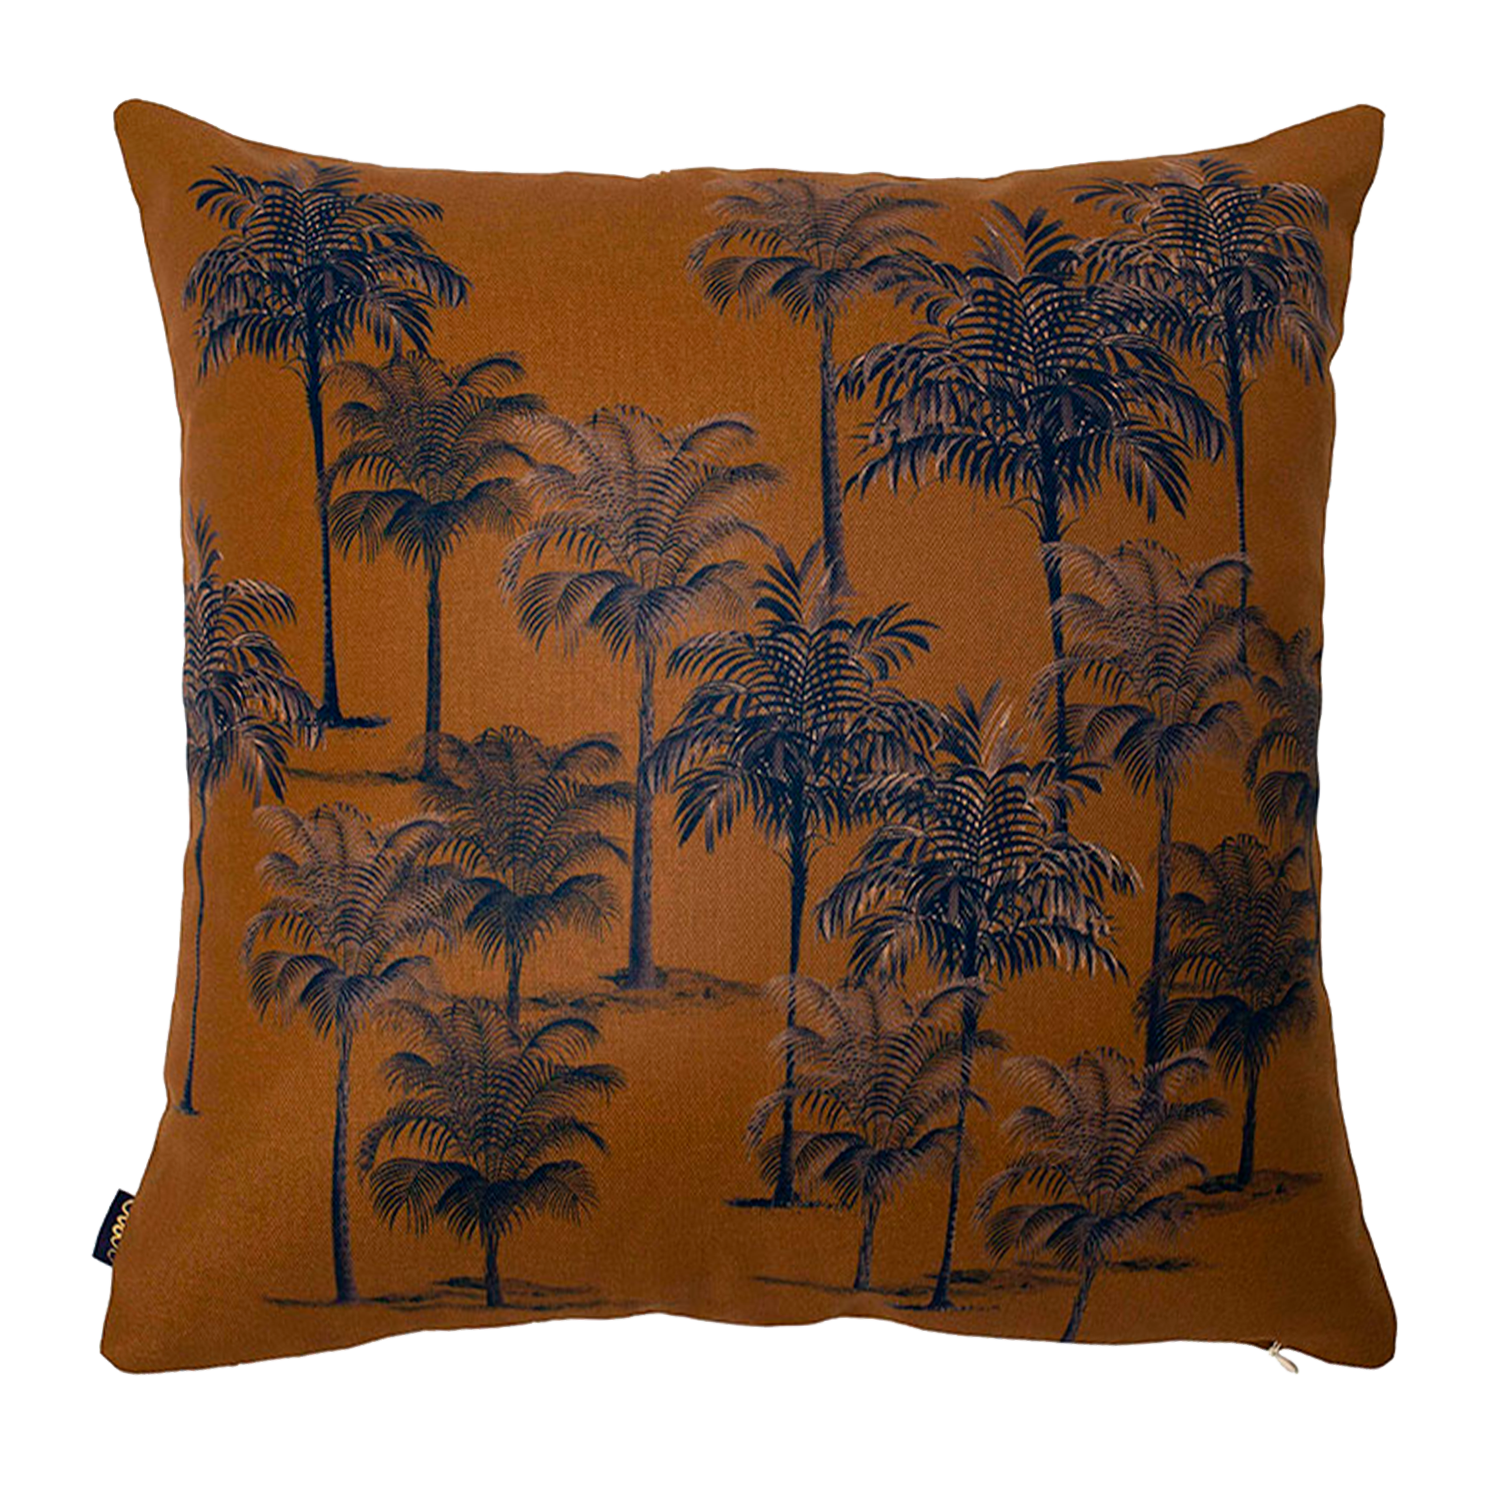 Cleopatra Animals - Canvas Pillow